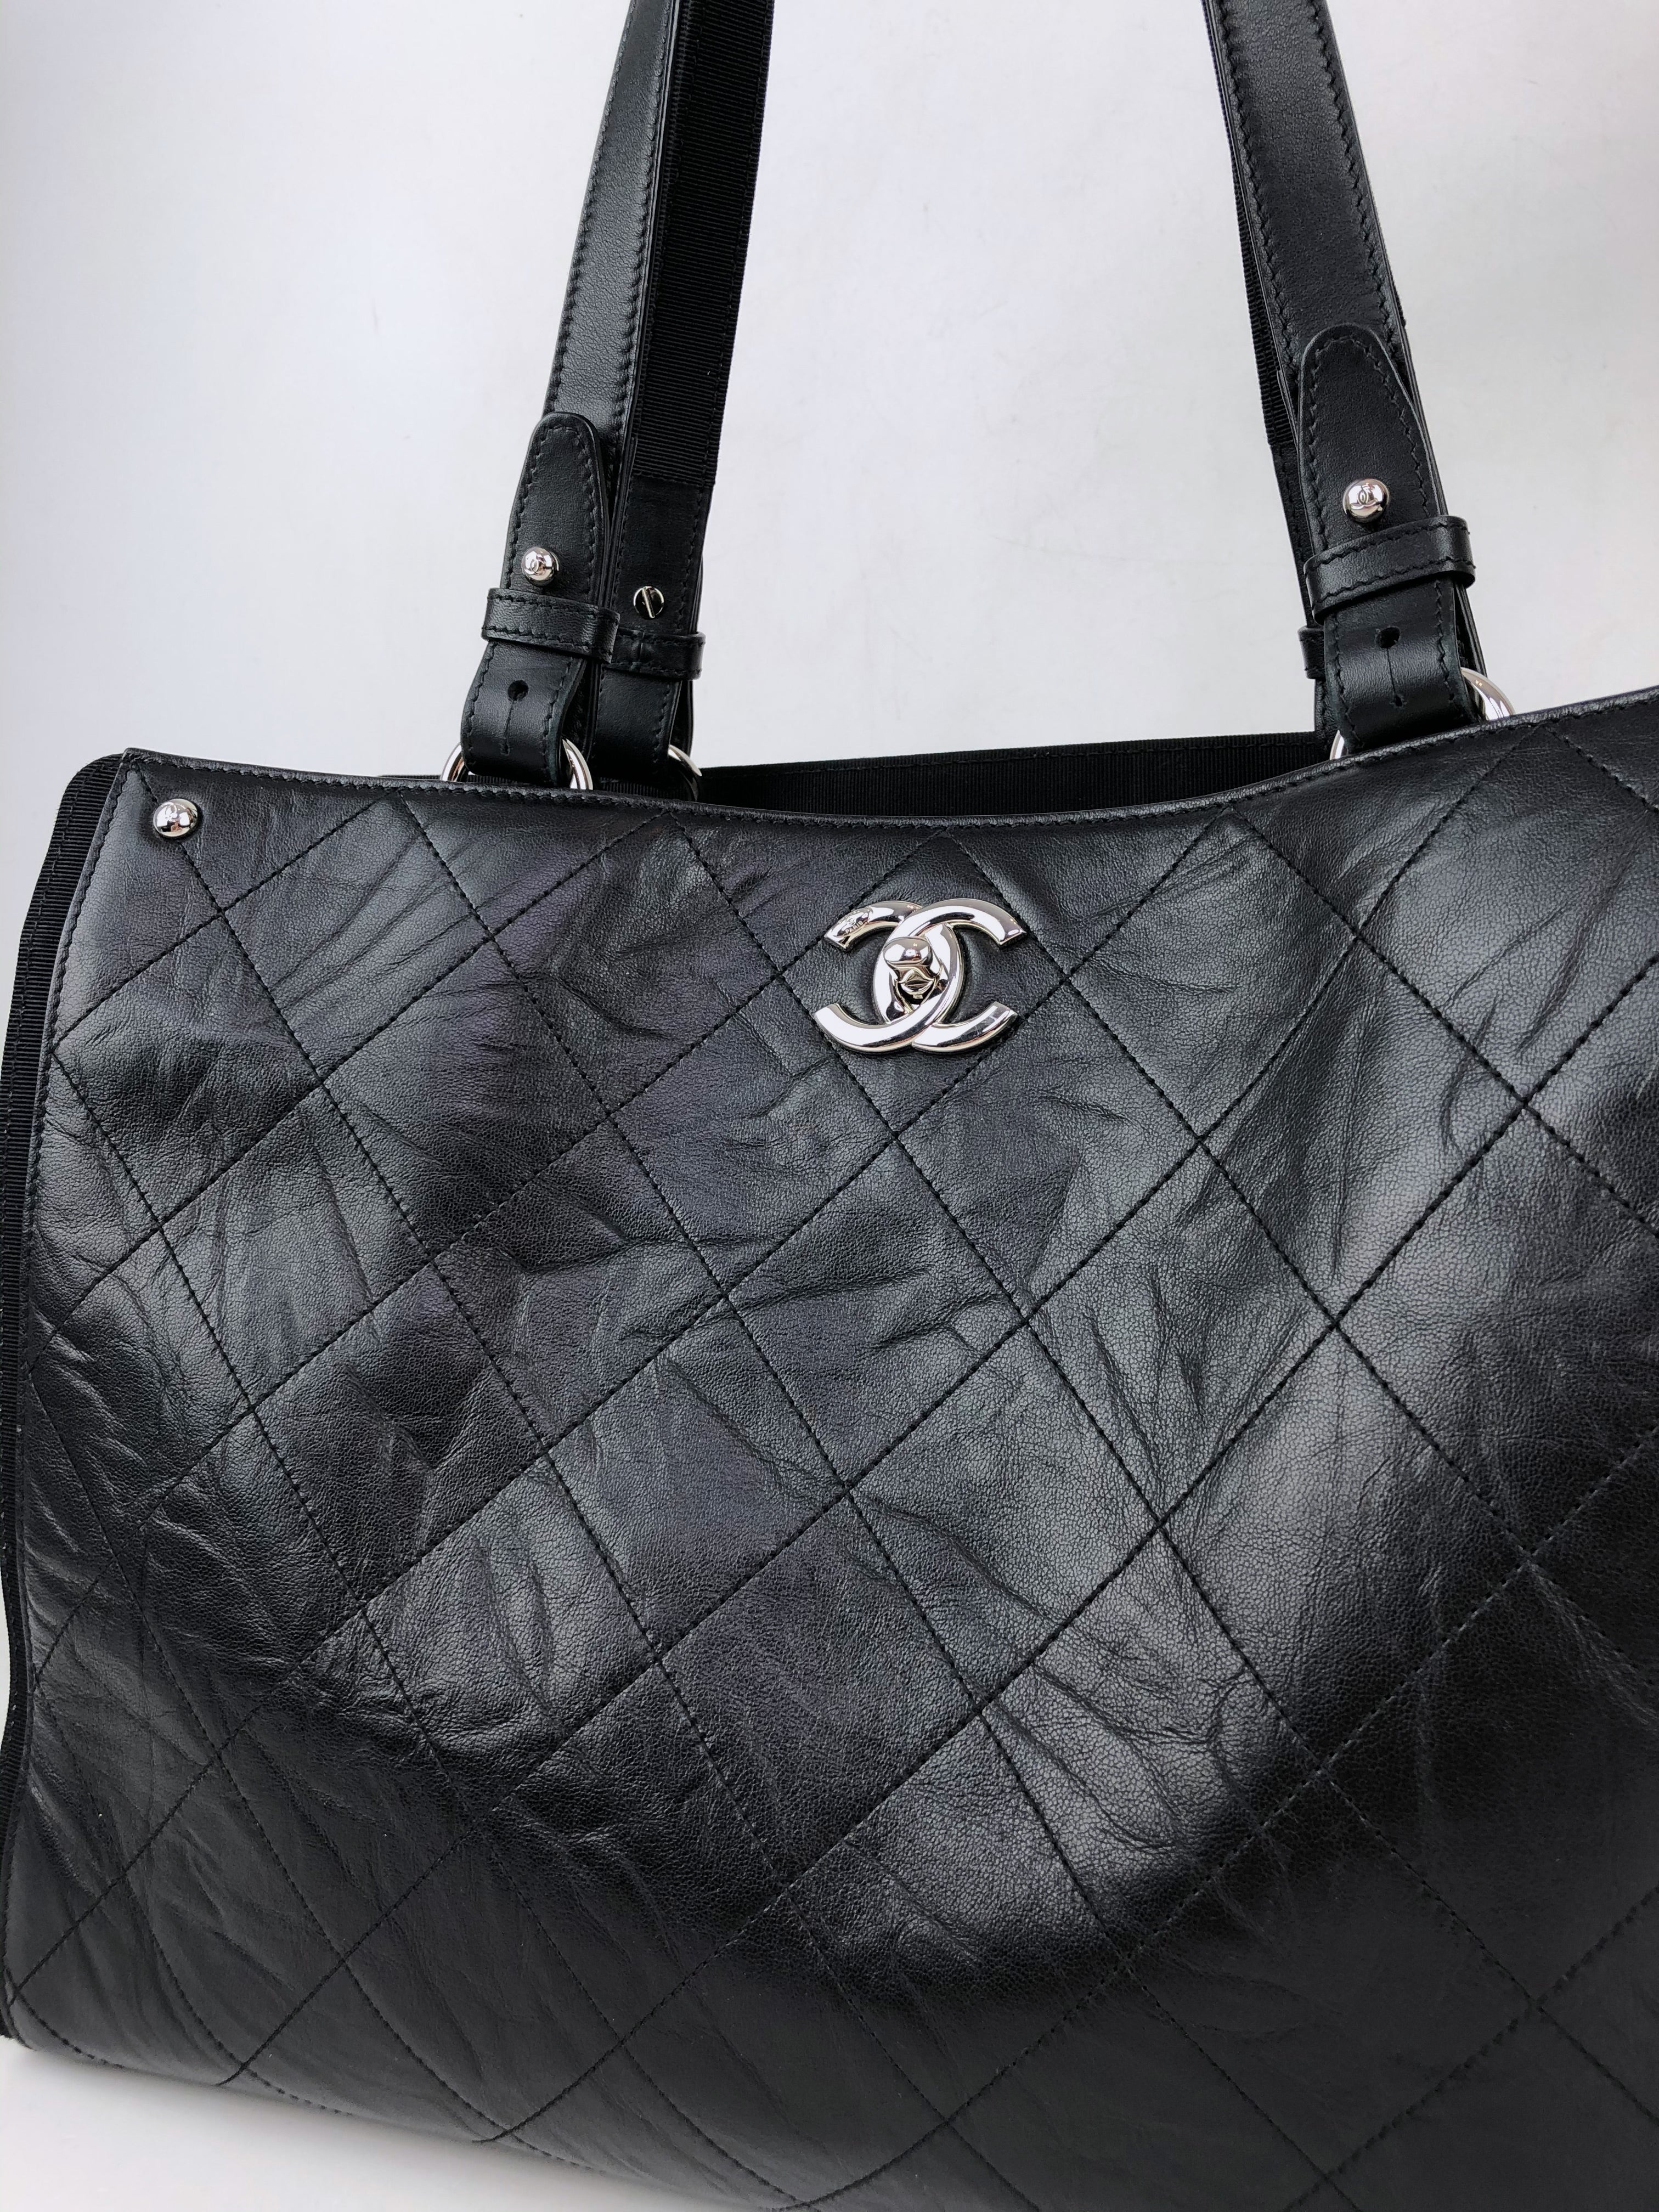 Chanel Shopper Bag